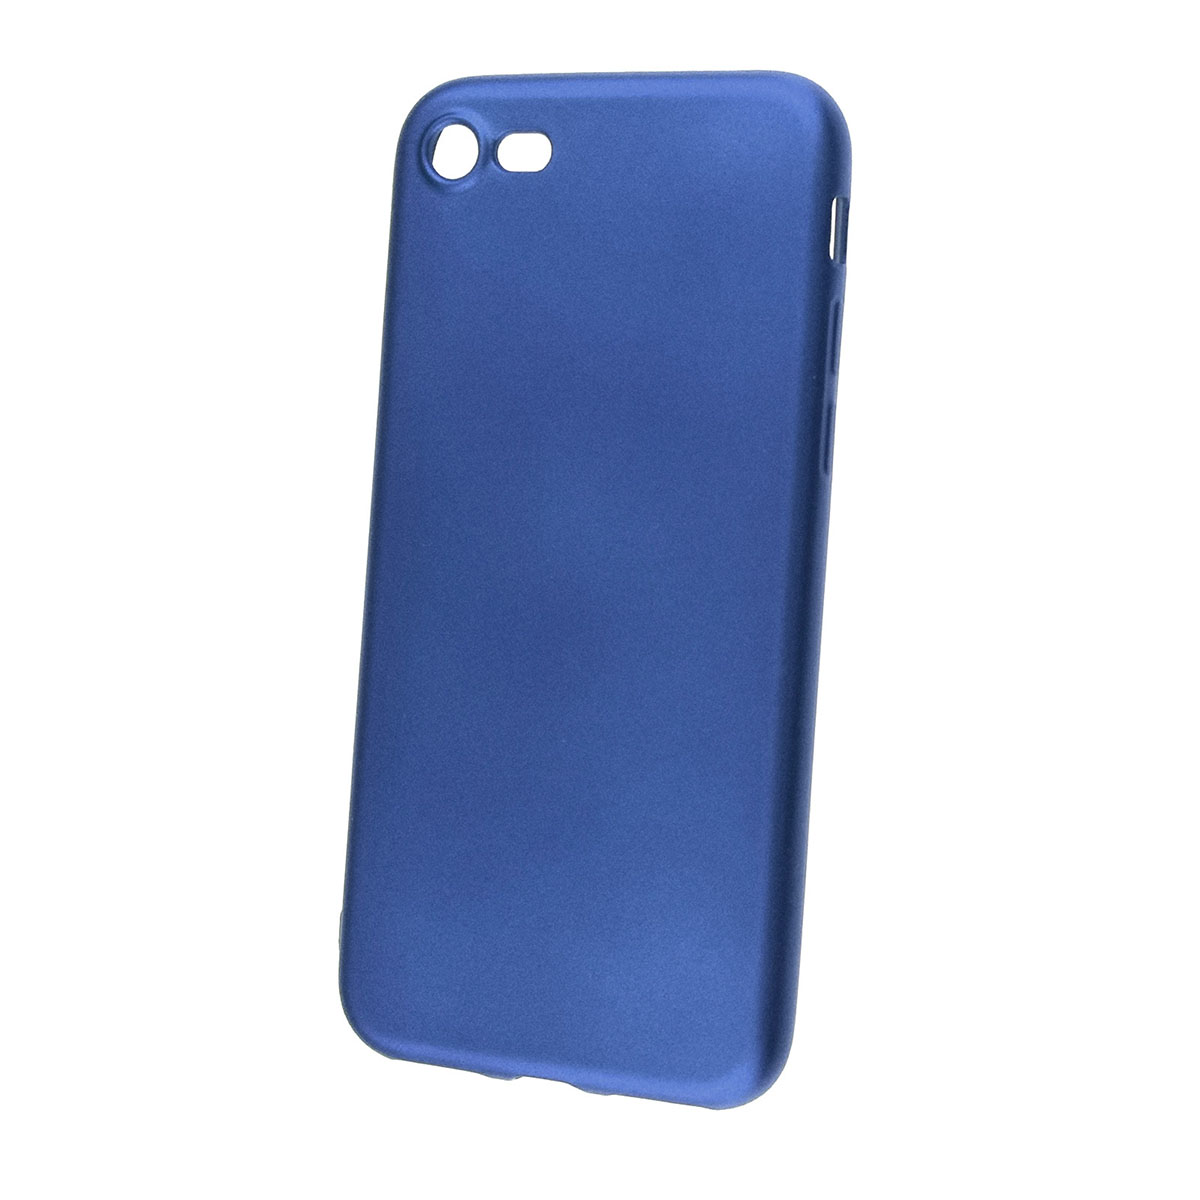 Чехол накладка MONARCH для APPLE iPhone 7, 8, силикон, цвет синий.